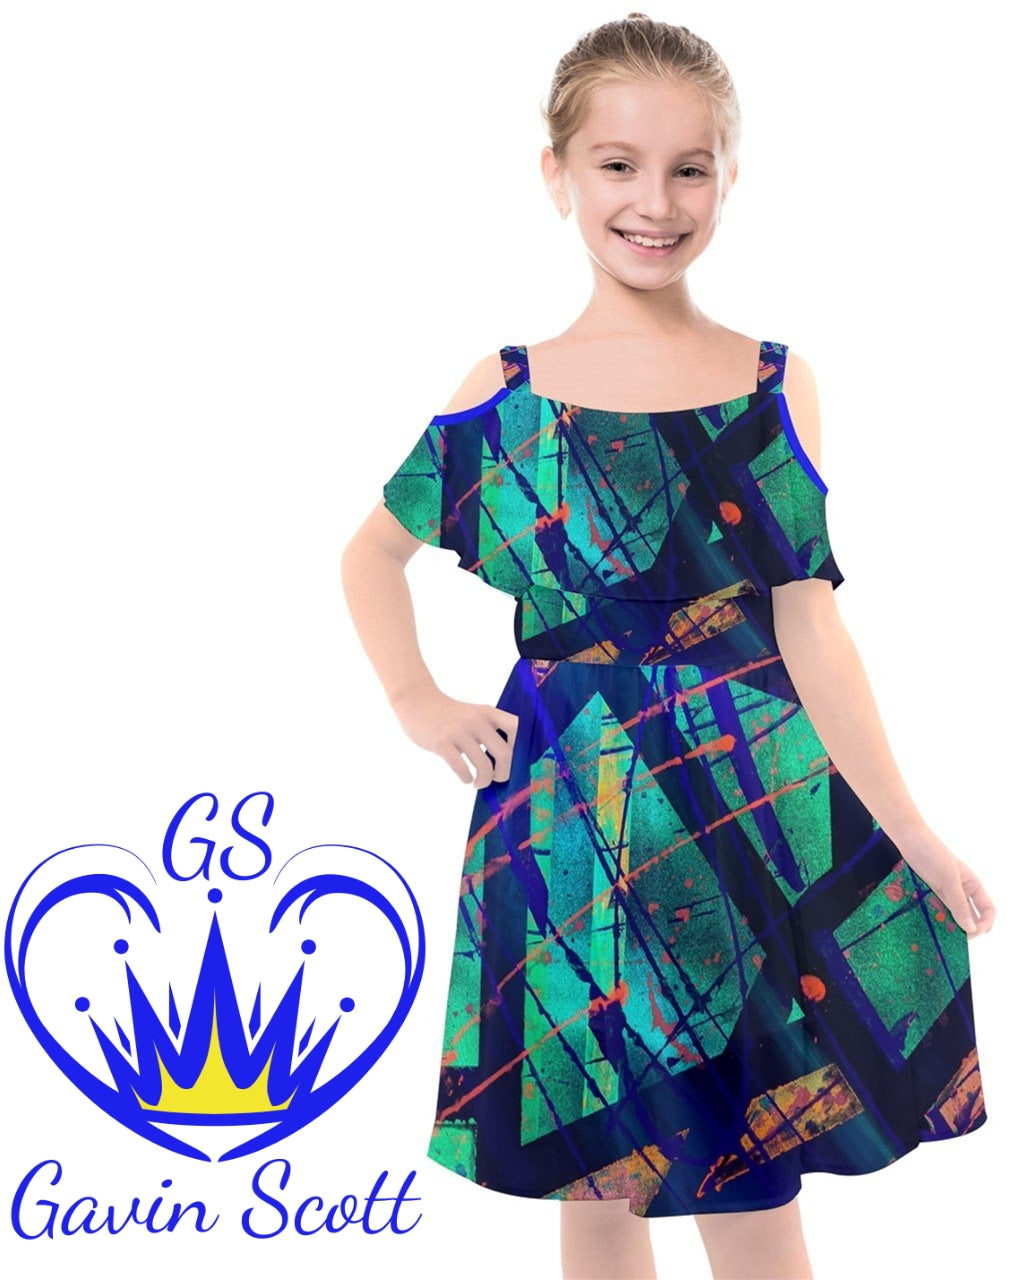 Gavin Scott Short Sleeve Shoulder Show Dress (Youth/Petite Femme 2-16)